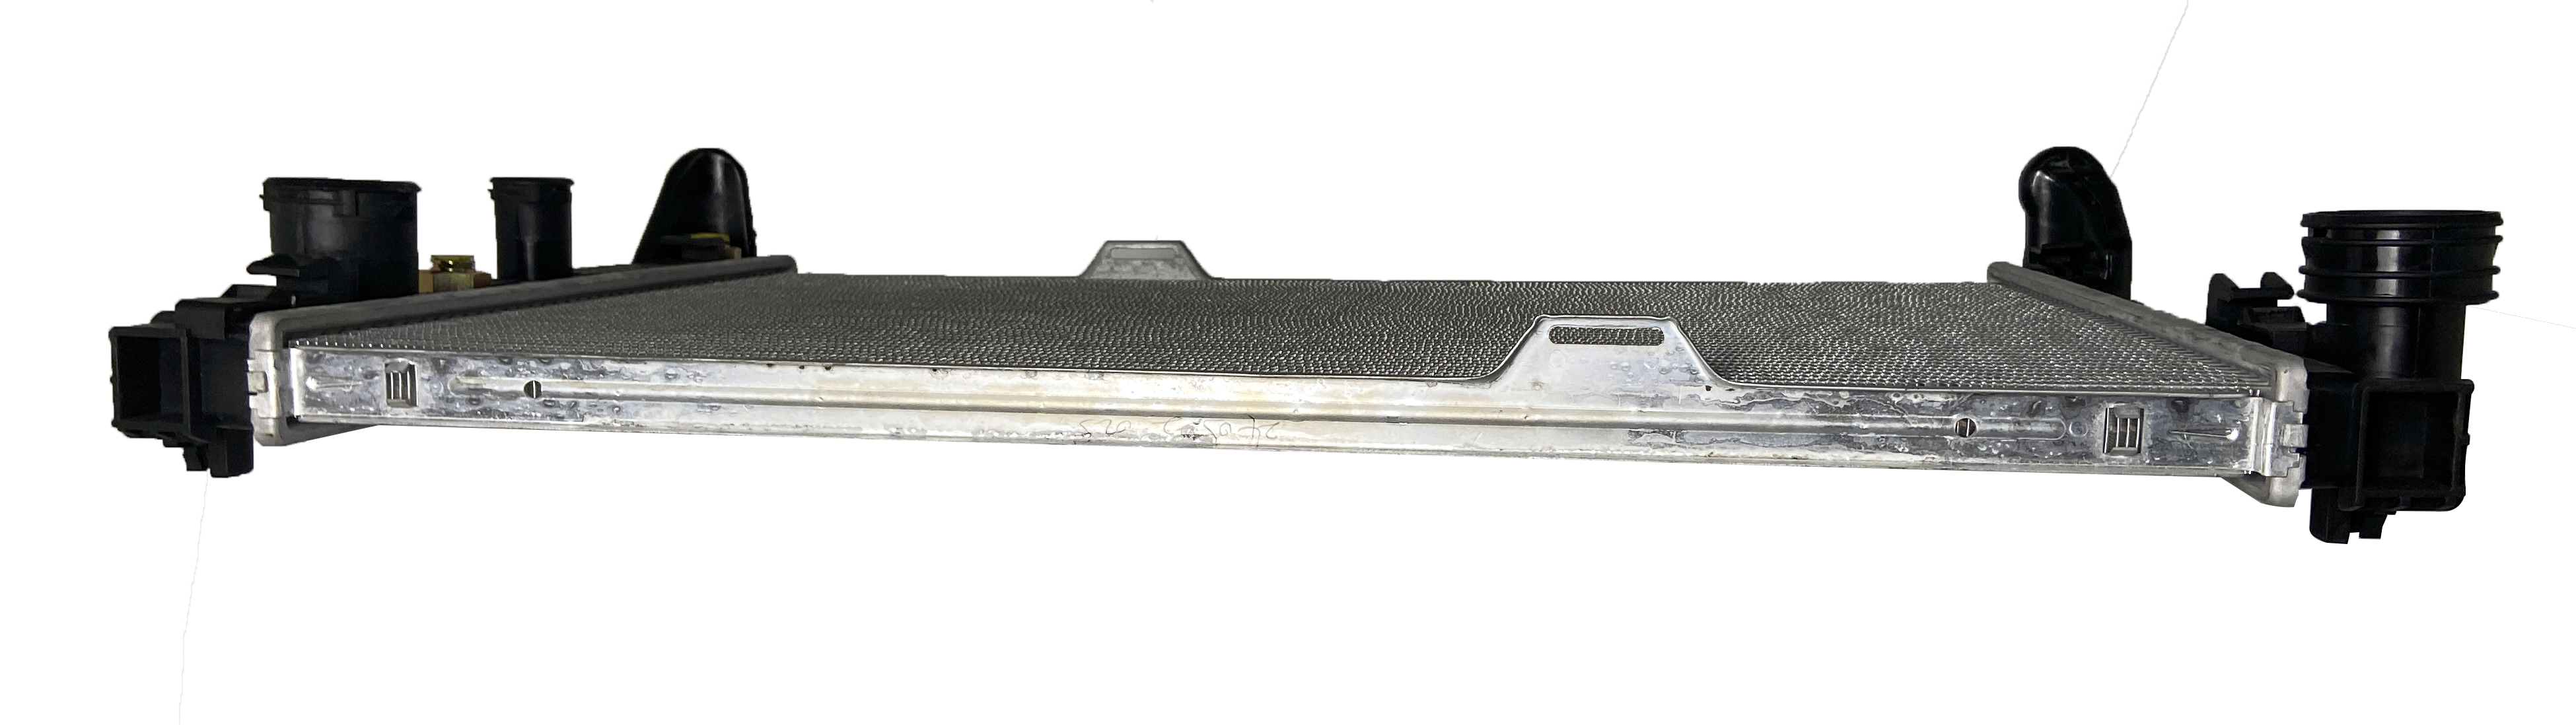 Radiator for MERCEDES BENZ C180